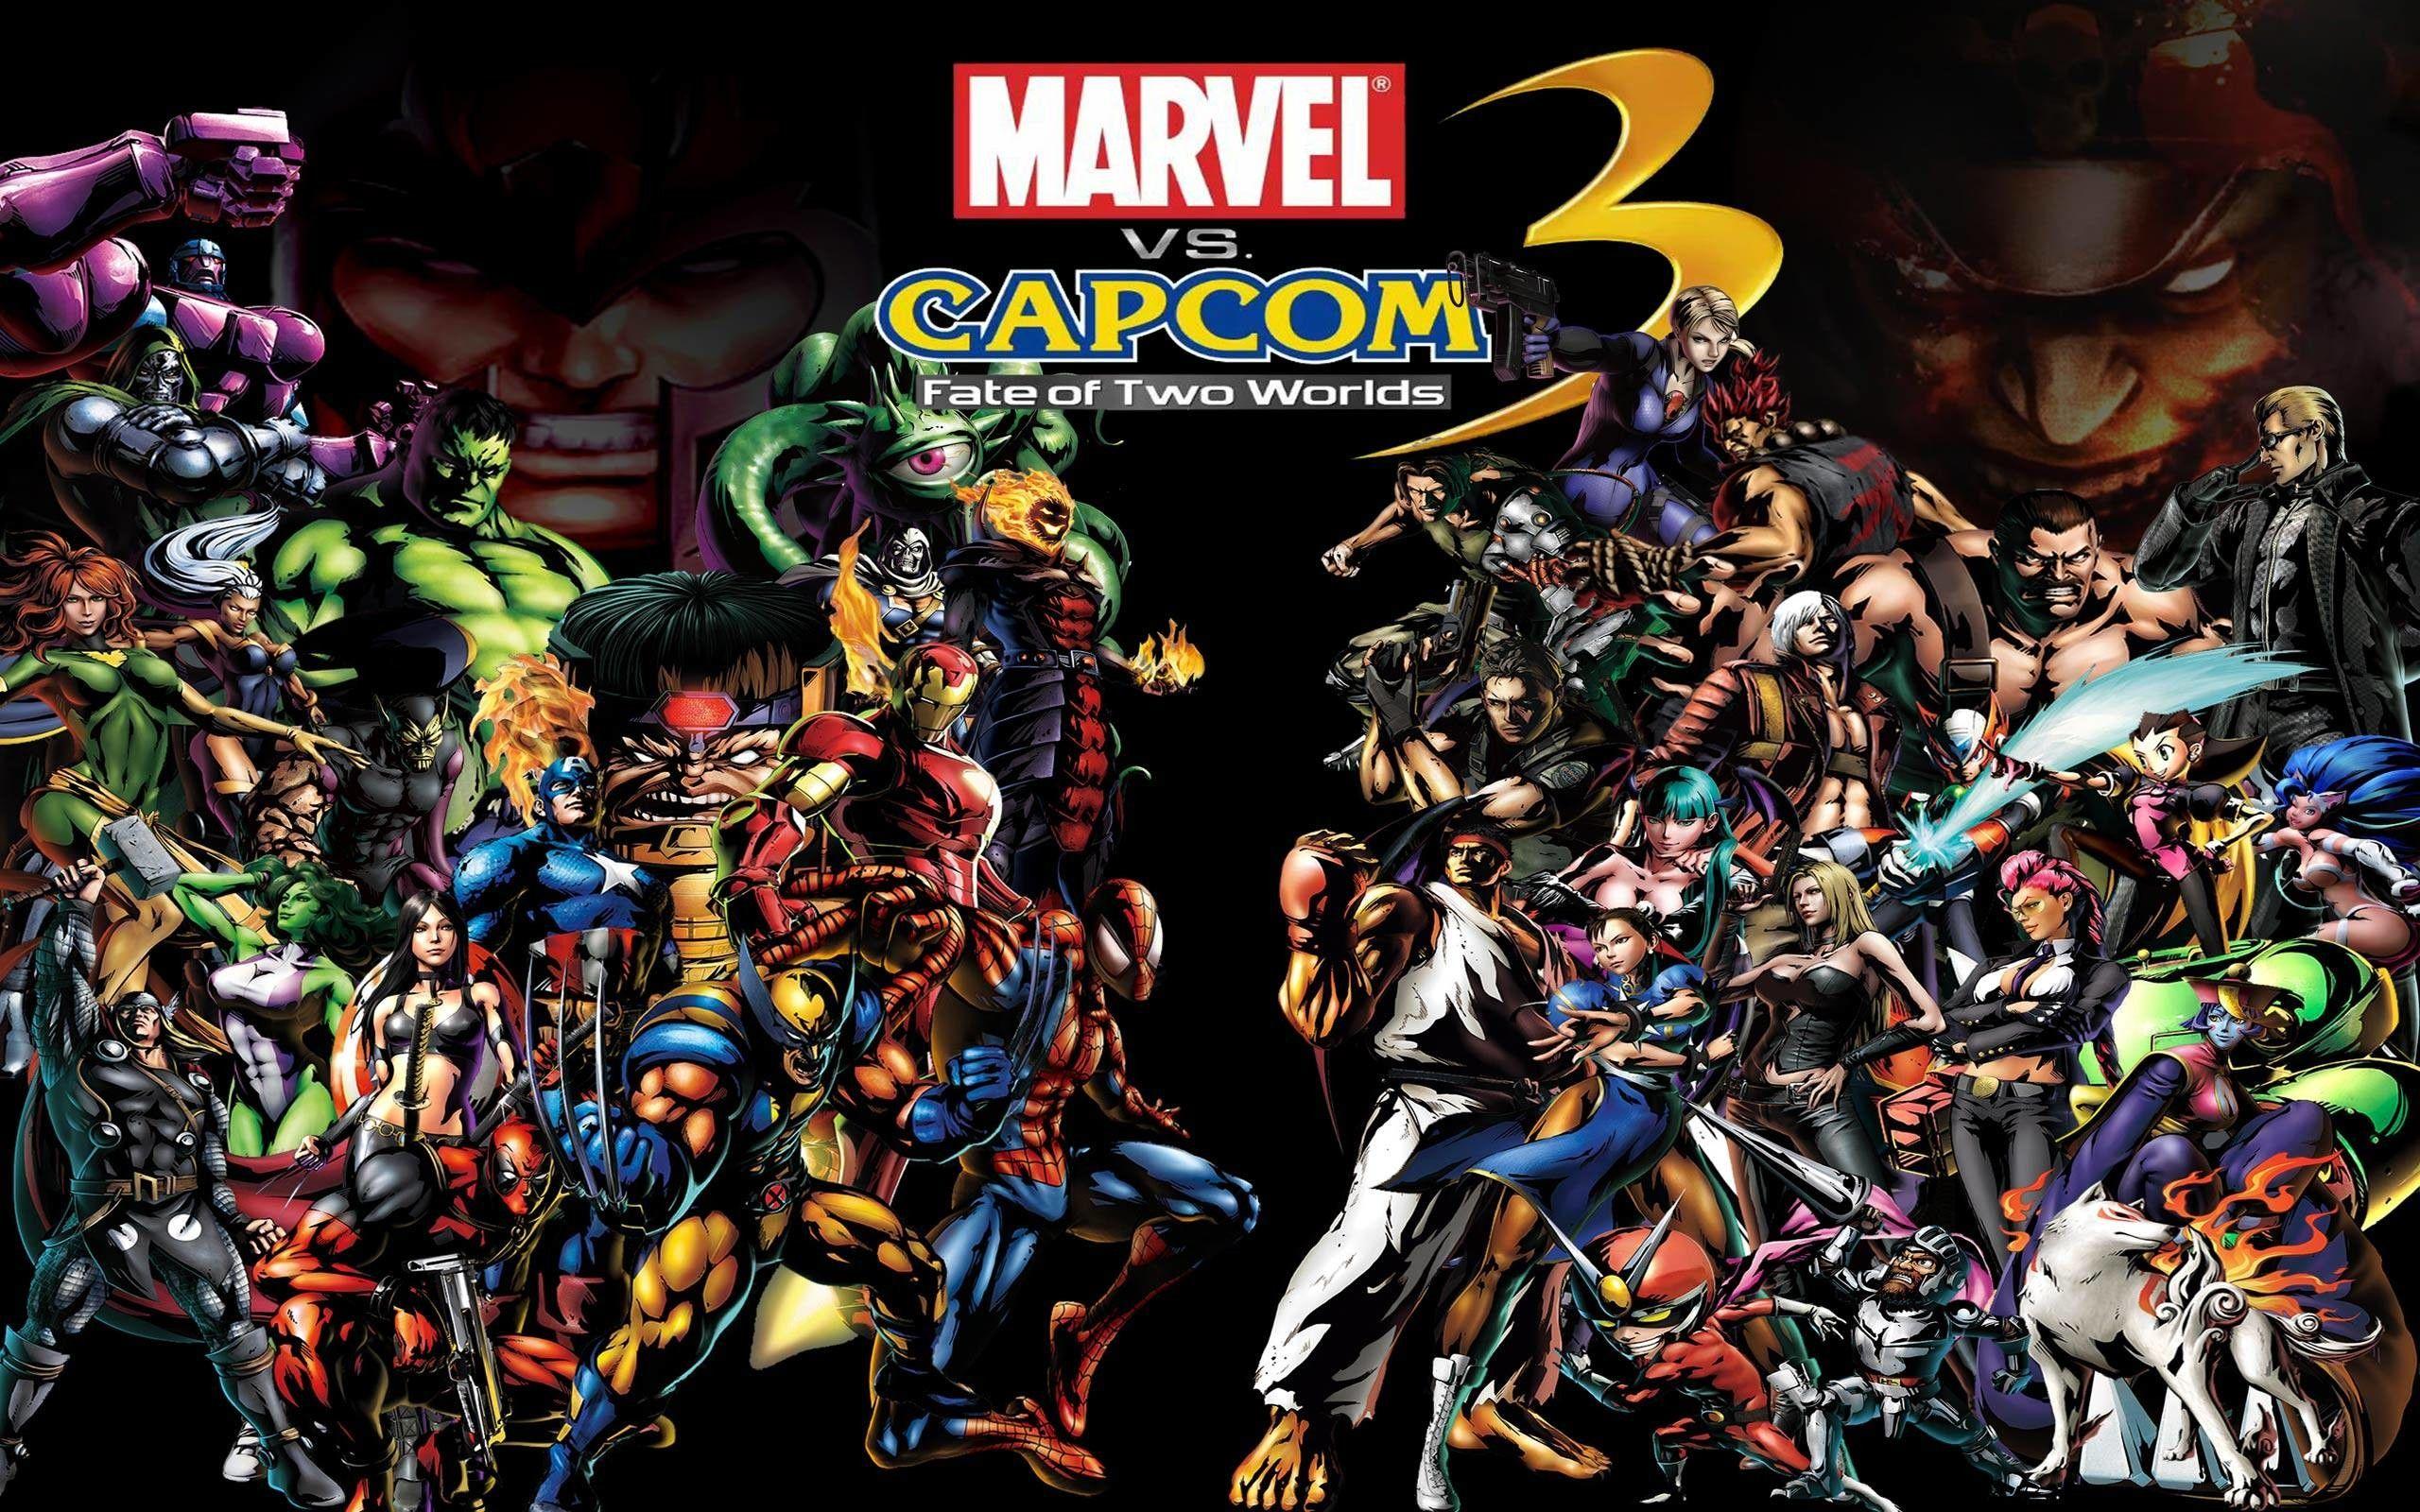 Marvel Vs Capcom Free Play